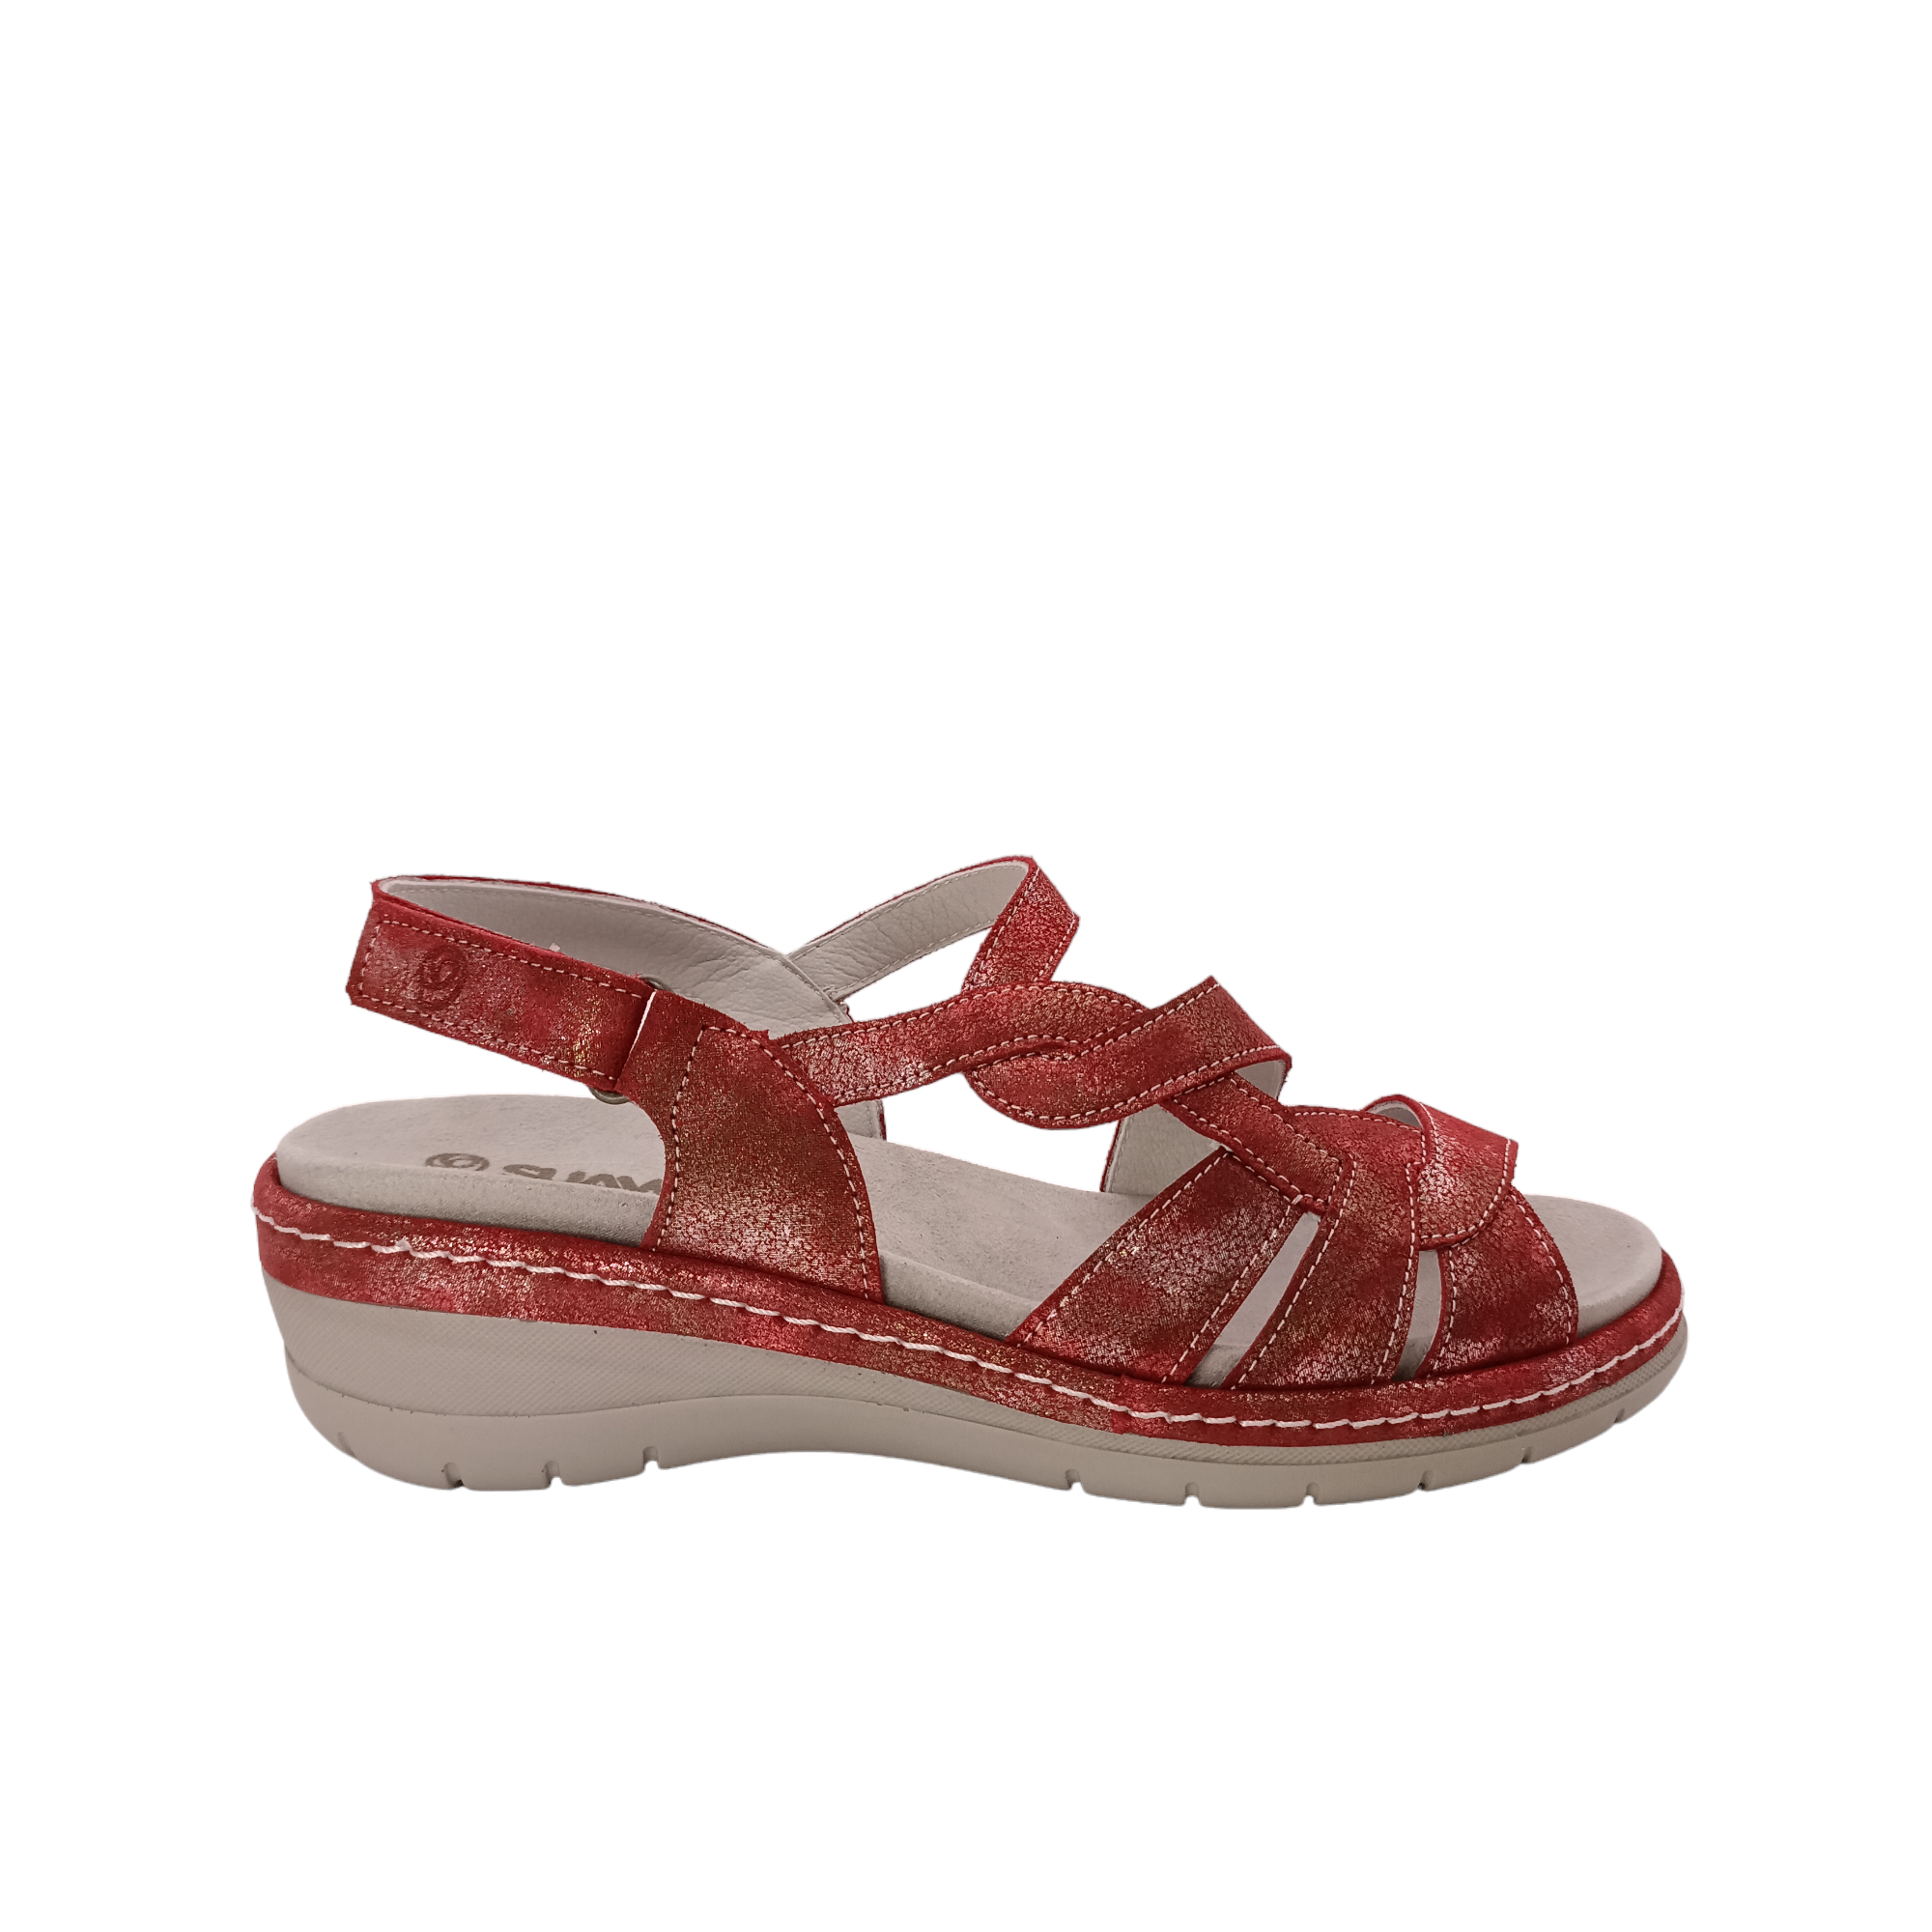 Elisa - shoe&me - Suave - Sandal - Sandals, Summer, Womens